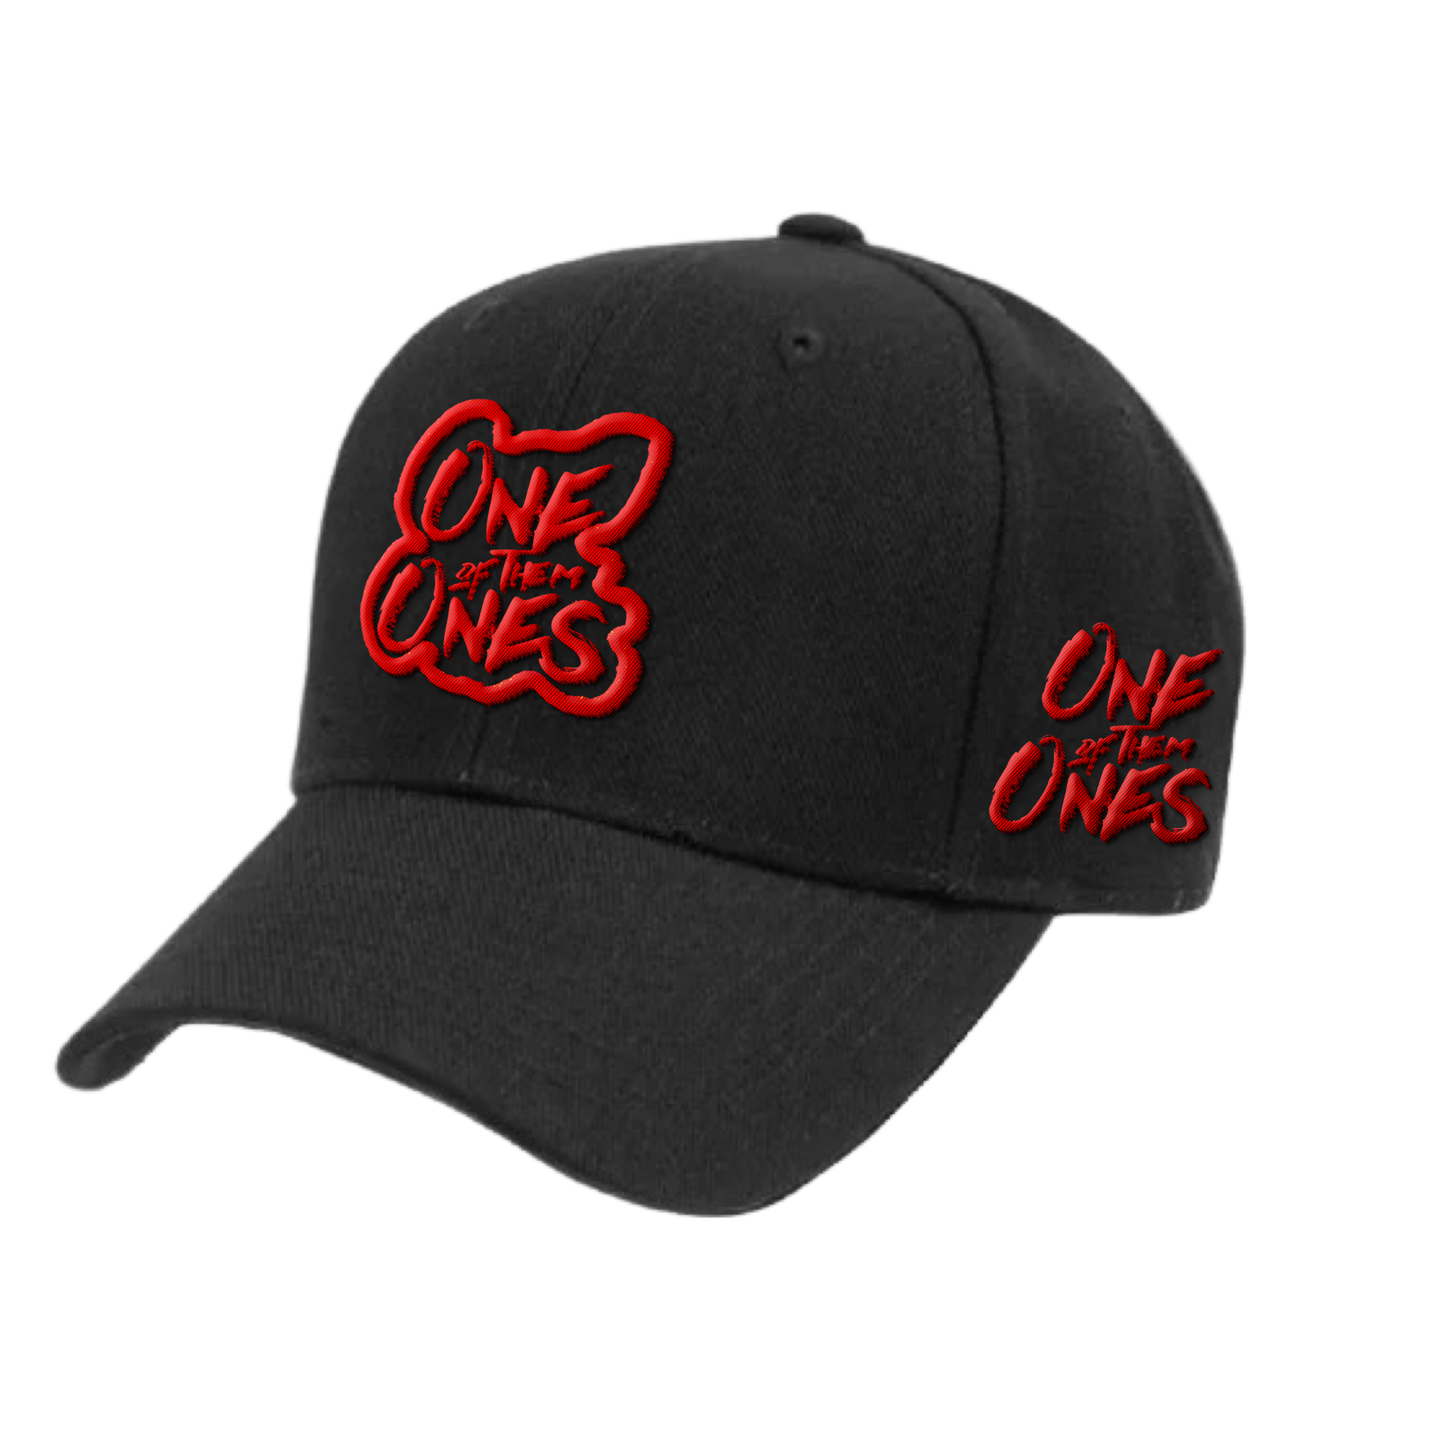 Organik Lyfestyle - 1OfThem1's OG Red SnapBack Hat W/Side Embroidery